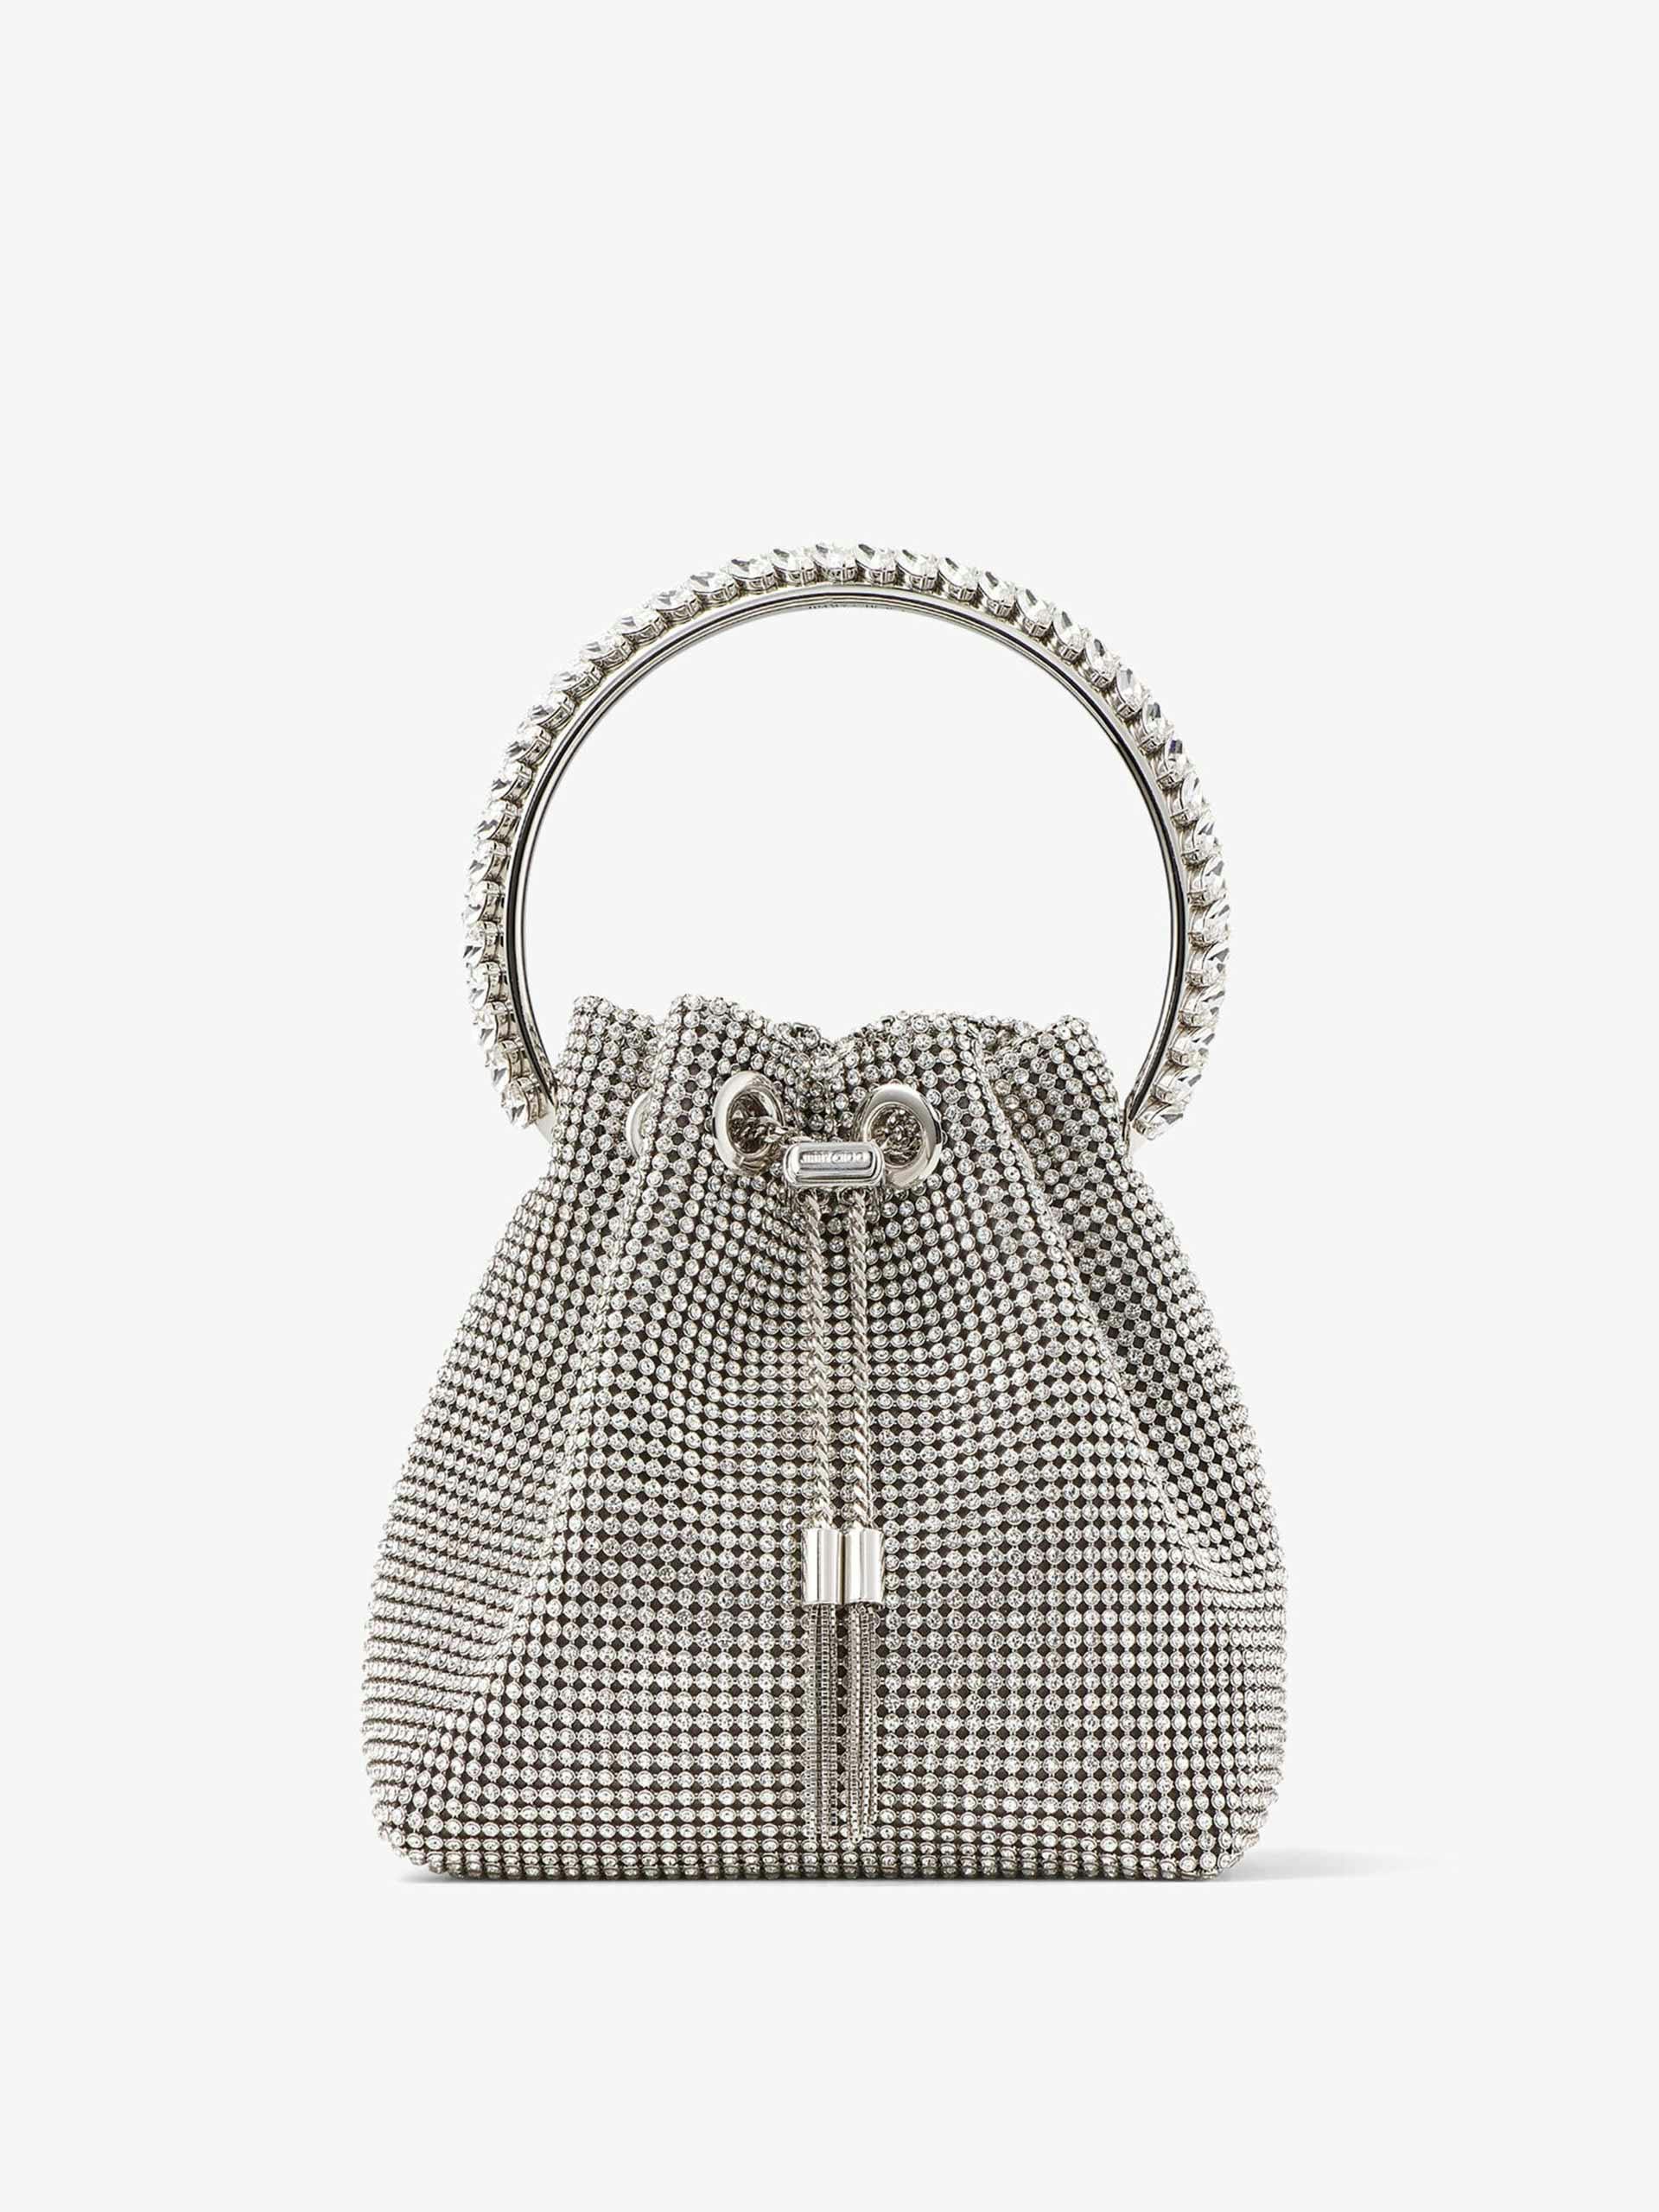 Silver crystal-embellished bag with handle